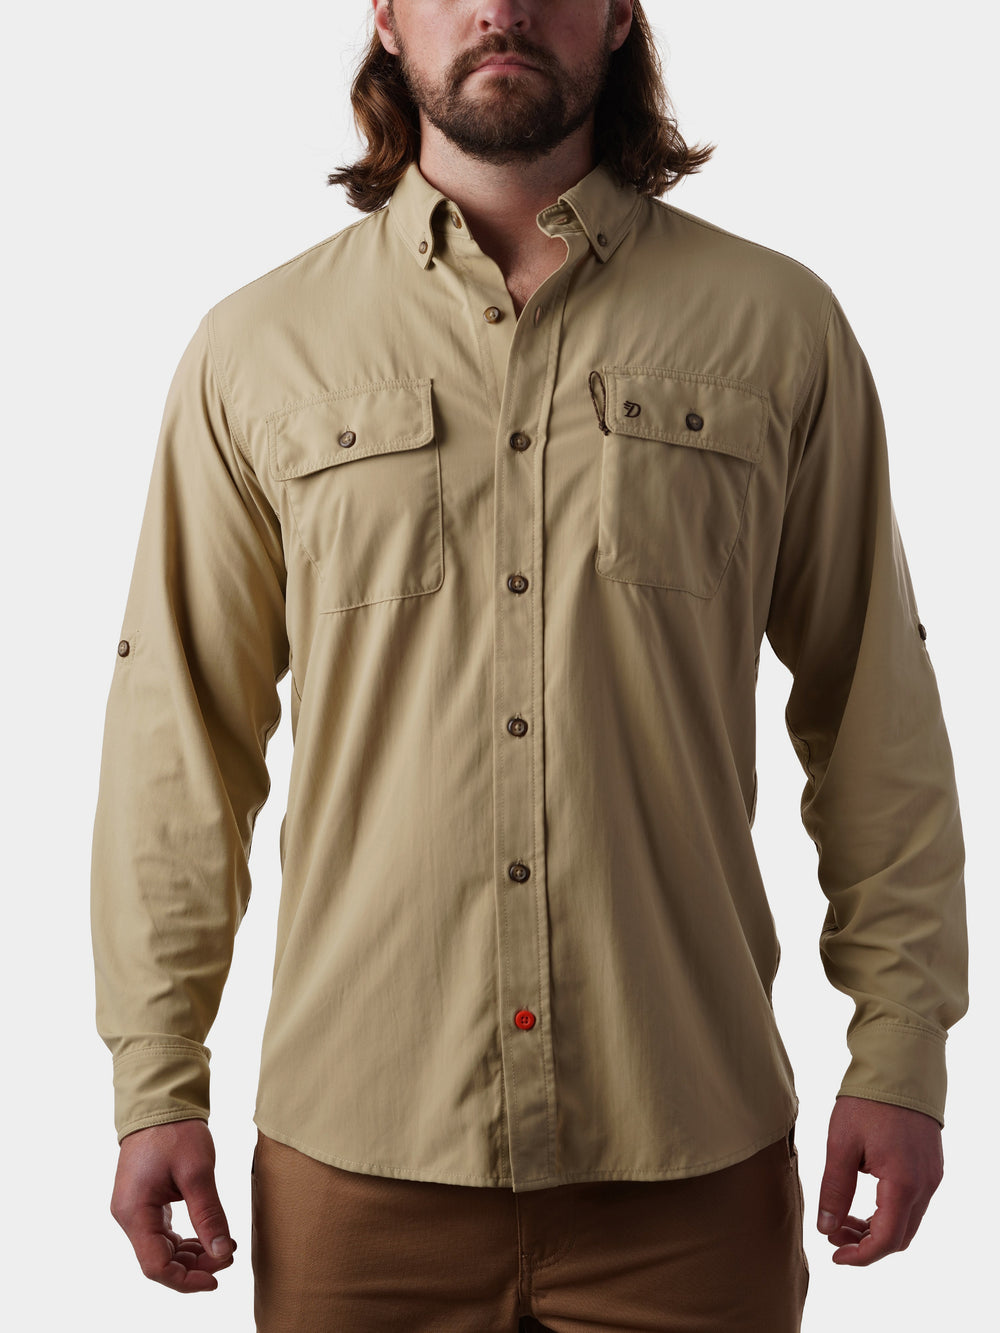 Men's Lightweight Hunting Shirt - Long Sleeve - Pumice